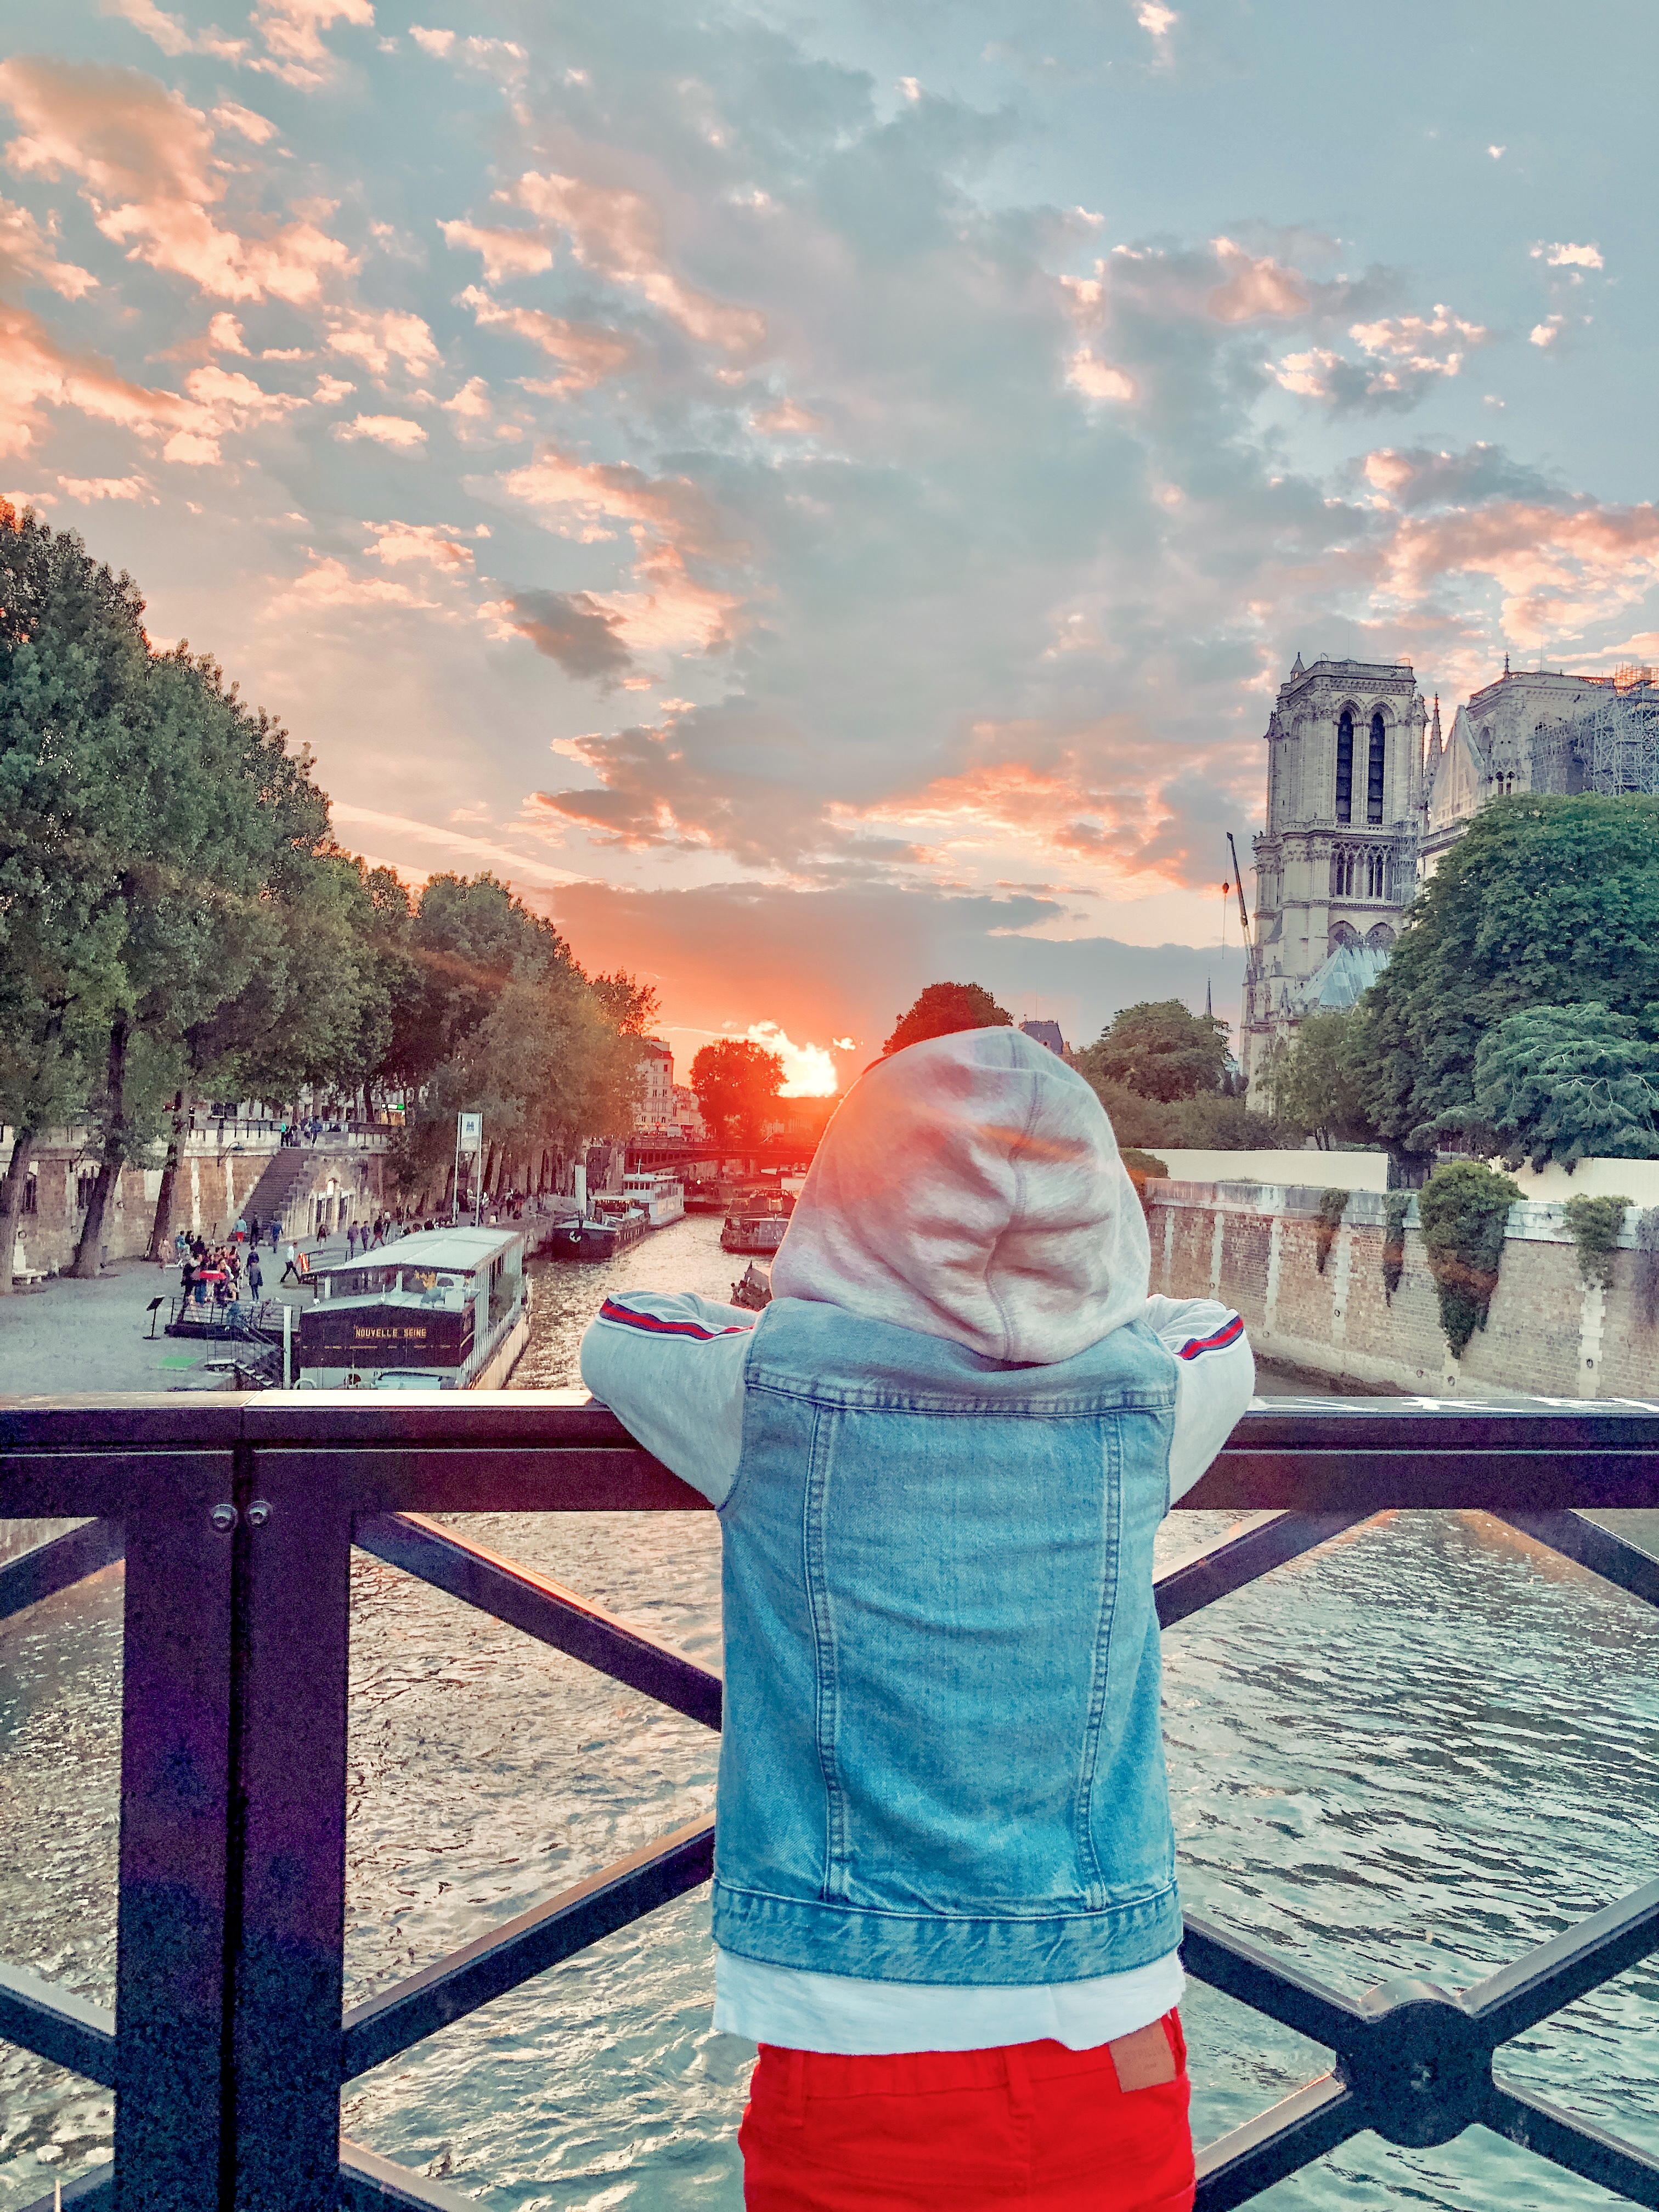 Ponti di Parigi, pont de l'archevêché, Parigi, Paris, Paris vacation, tourism in Paris, Paris Travel, balade a Paris, guida di Parigi, paris guide